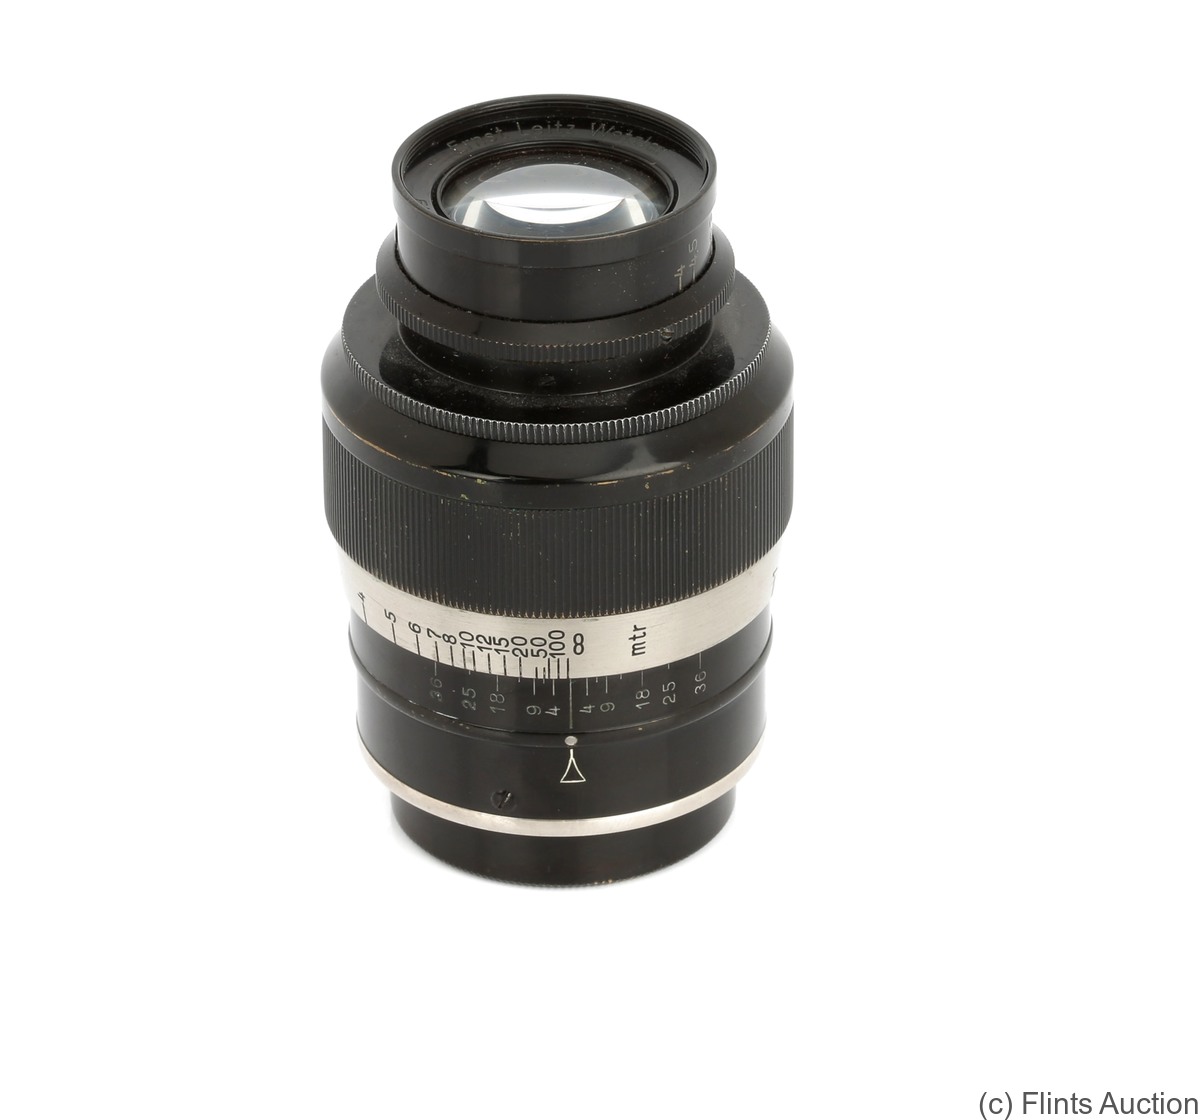 Leitz: 90mm (9cm) f4 Elmar (SM, black/nickel) 'Fat Elmar' camera